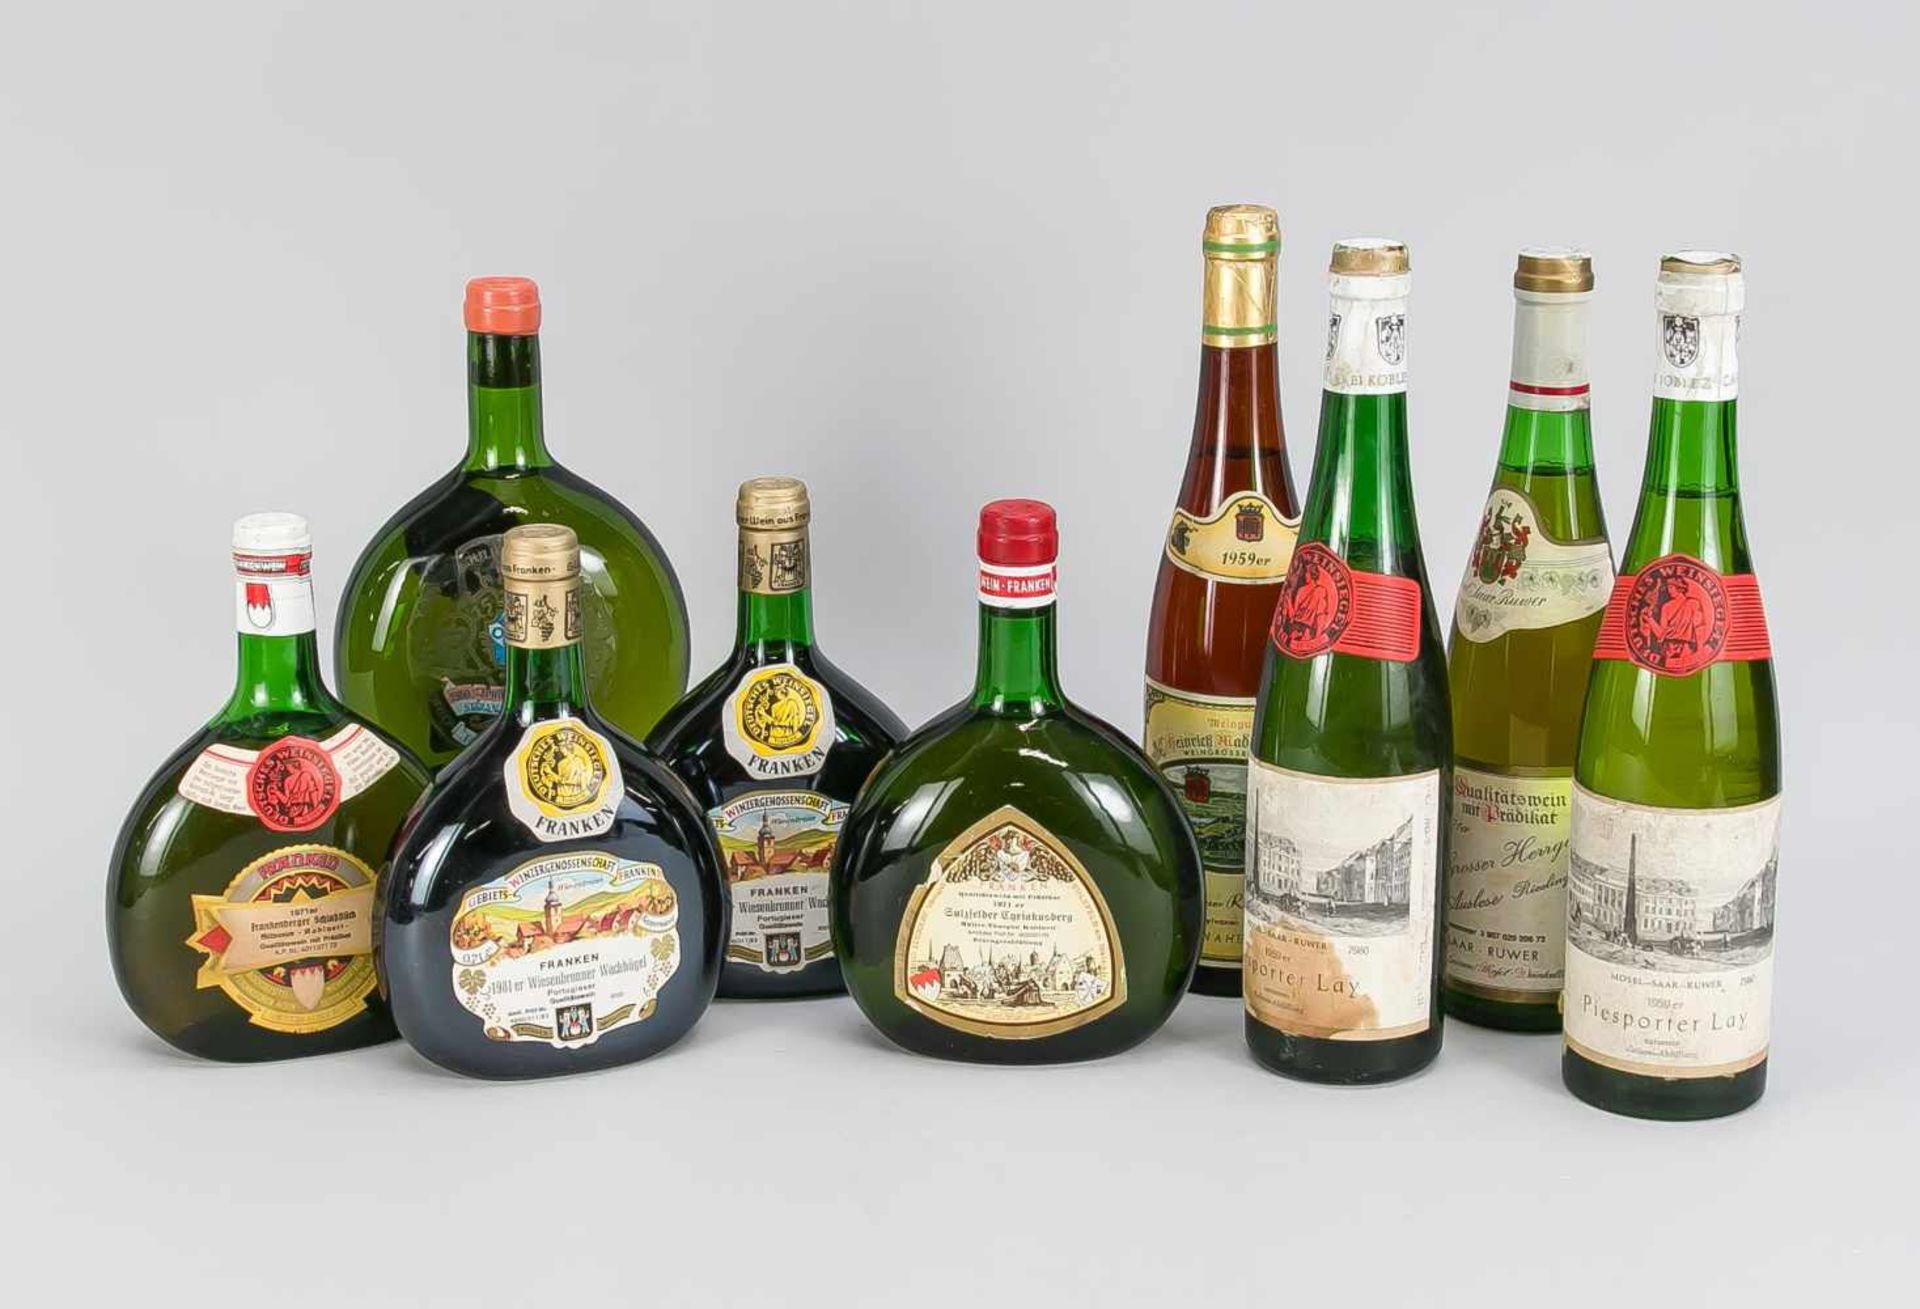 9 Flaschen Weißwein: 2x 1959 MSR Piesporter Lay, 1x 1959 Nahe Rüdesheimer RosengartenRiesling, 1x